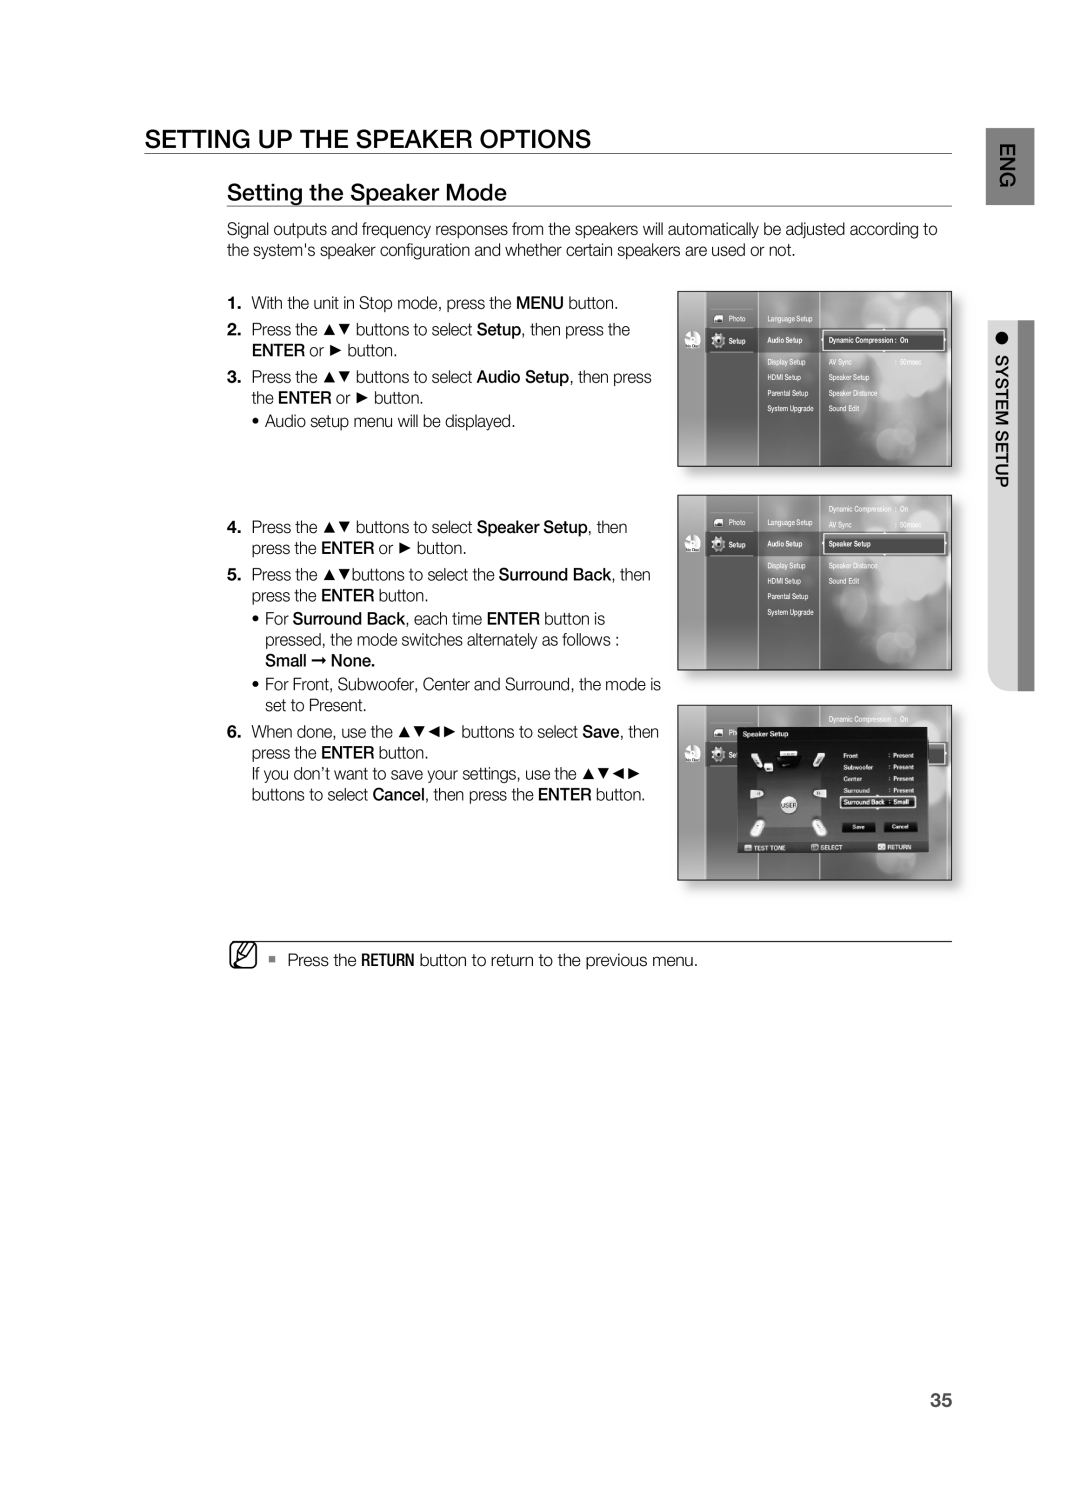 Samsung HT-BD2S manual SETTIng UP THE SPEAKER OPTIOnS, Setting the Speaker Mode 